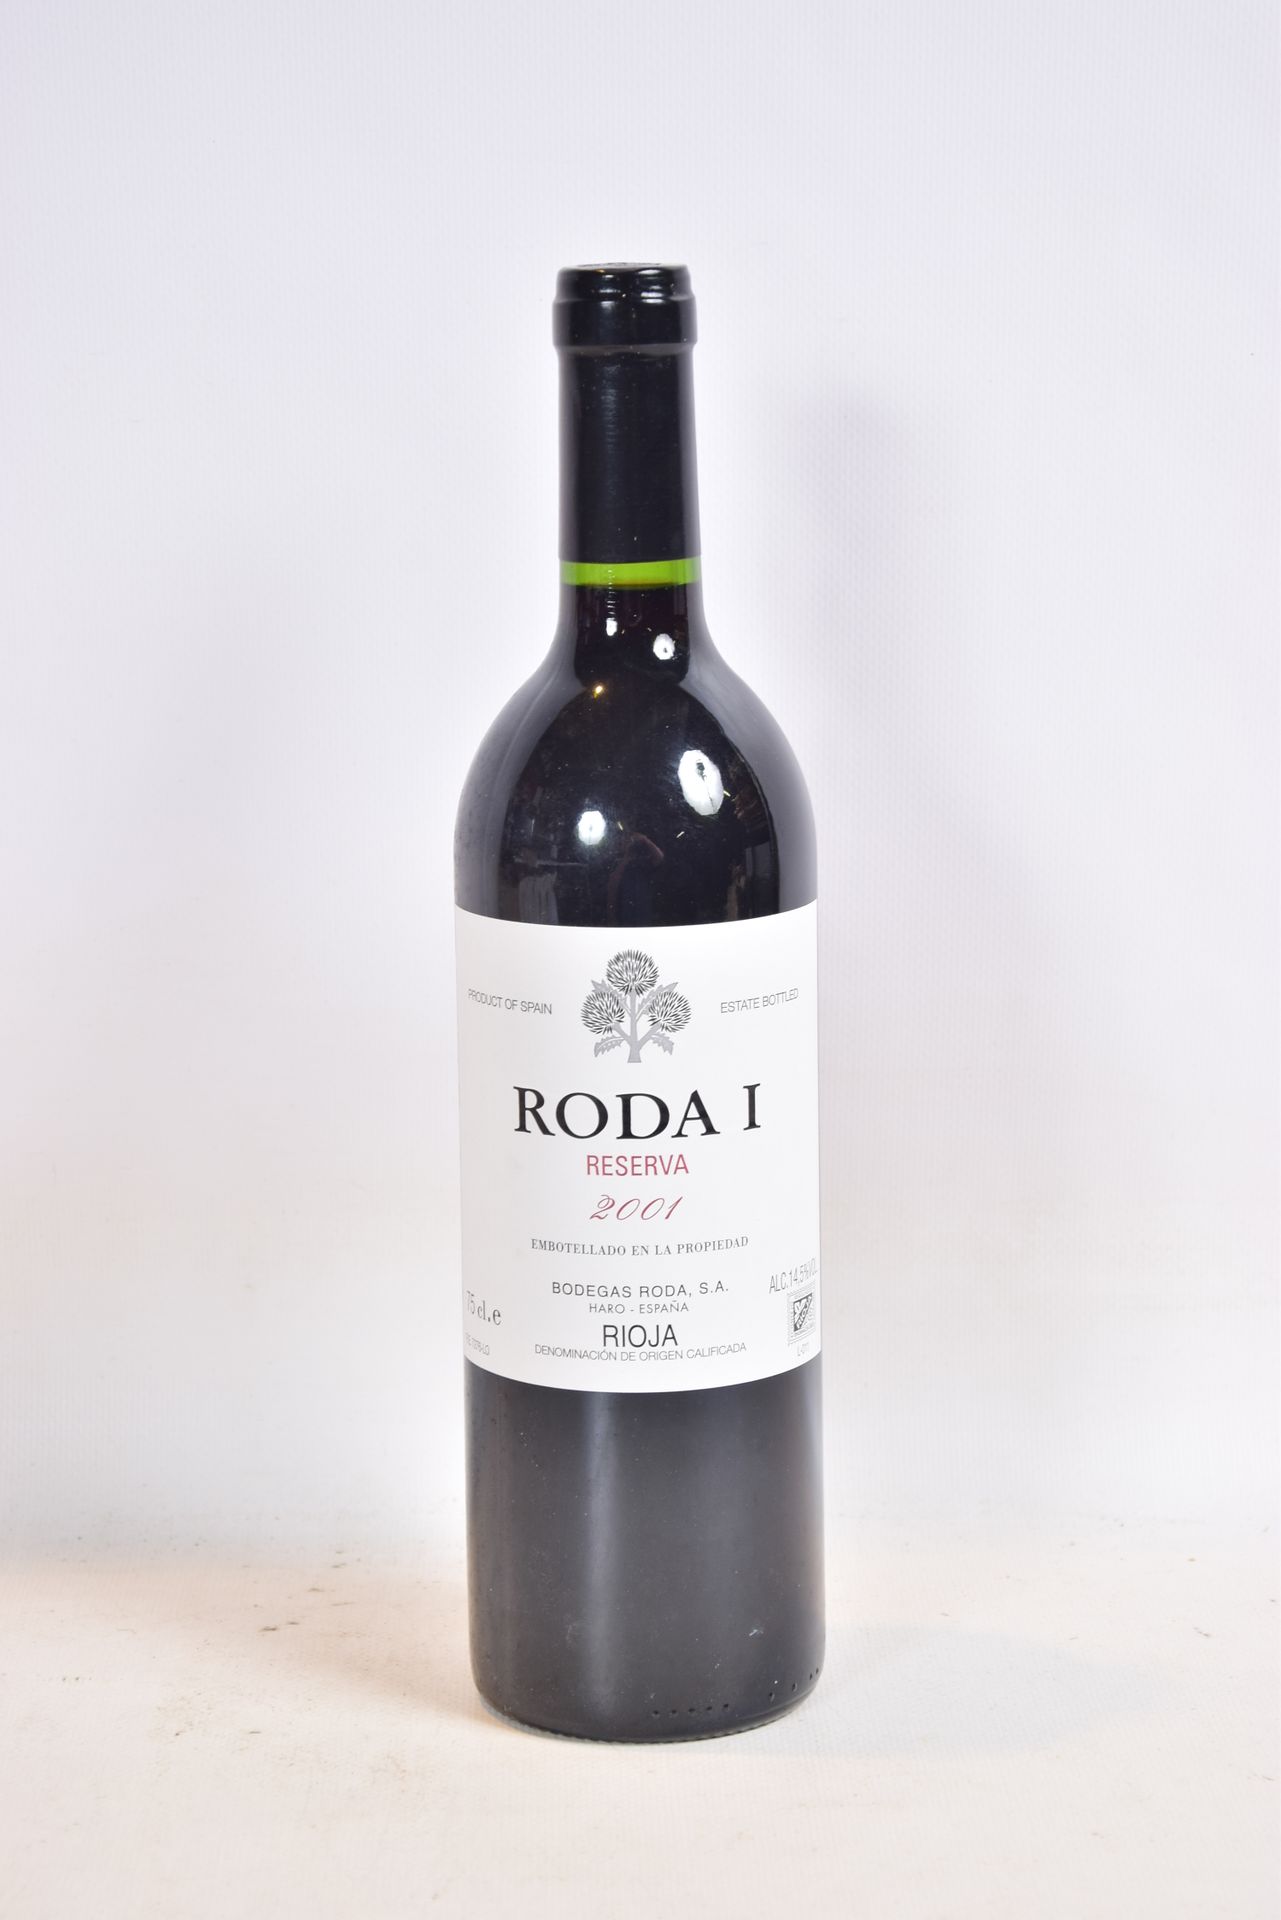 Null 1 Blle Rioja RODA 1 Reserva mise Bodegas Roda (Spain) 2001

	Presentation a&hellip;